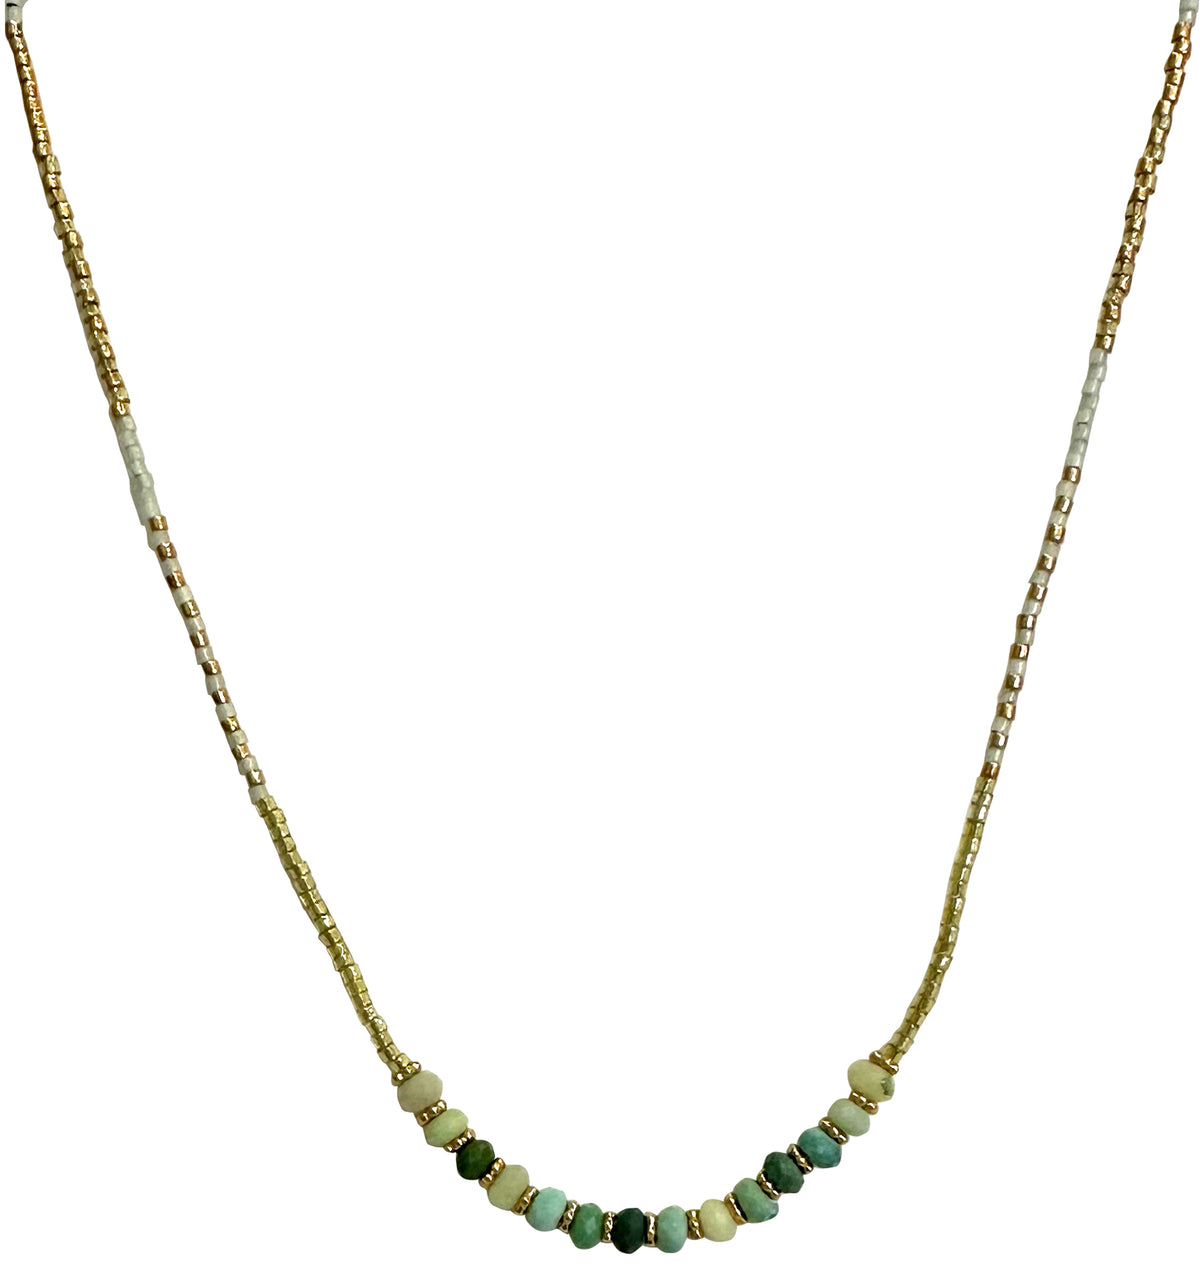 Chrysoprase Necklace with Semi-Precious Stones